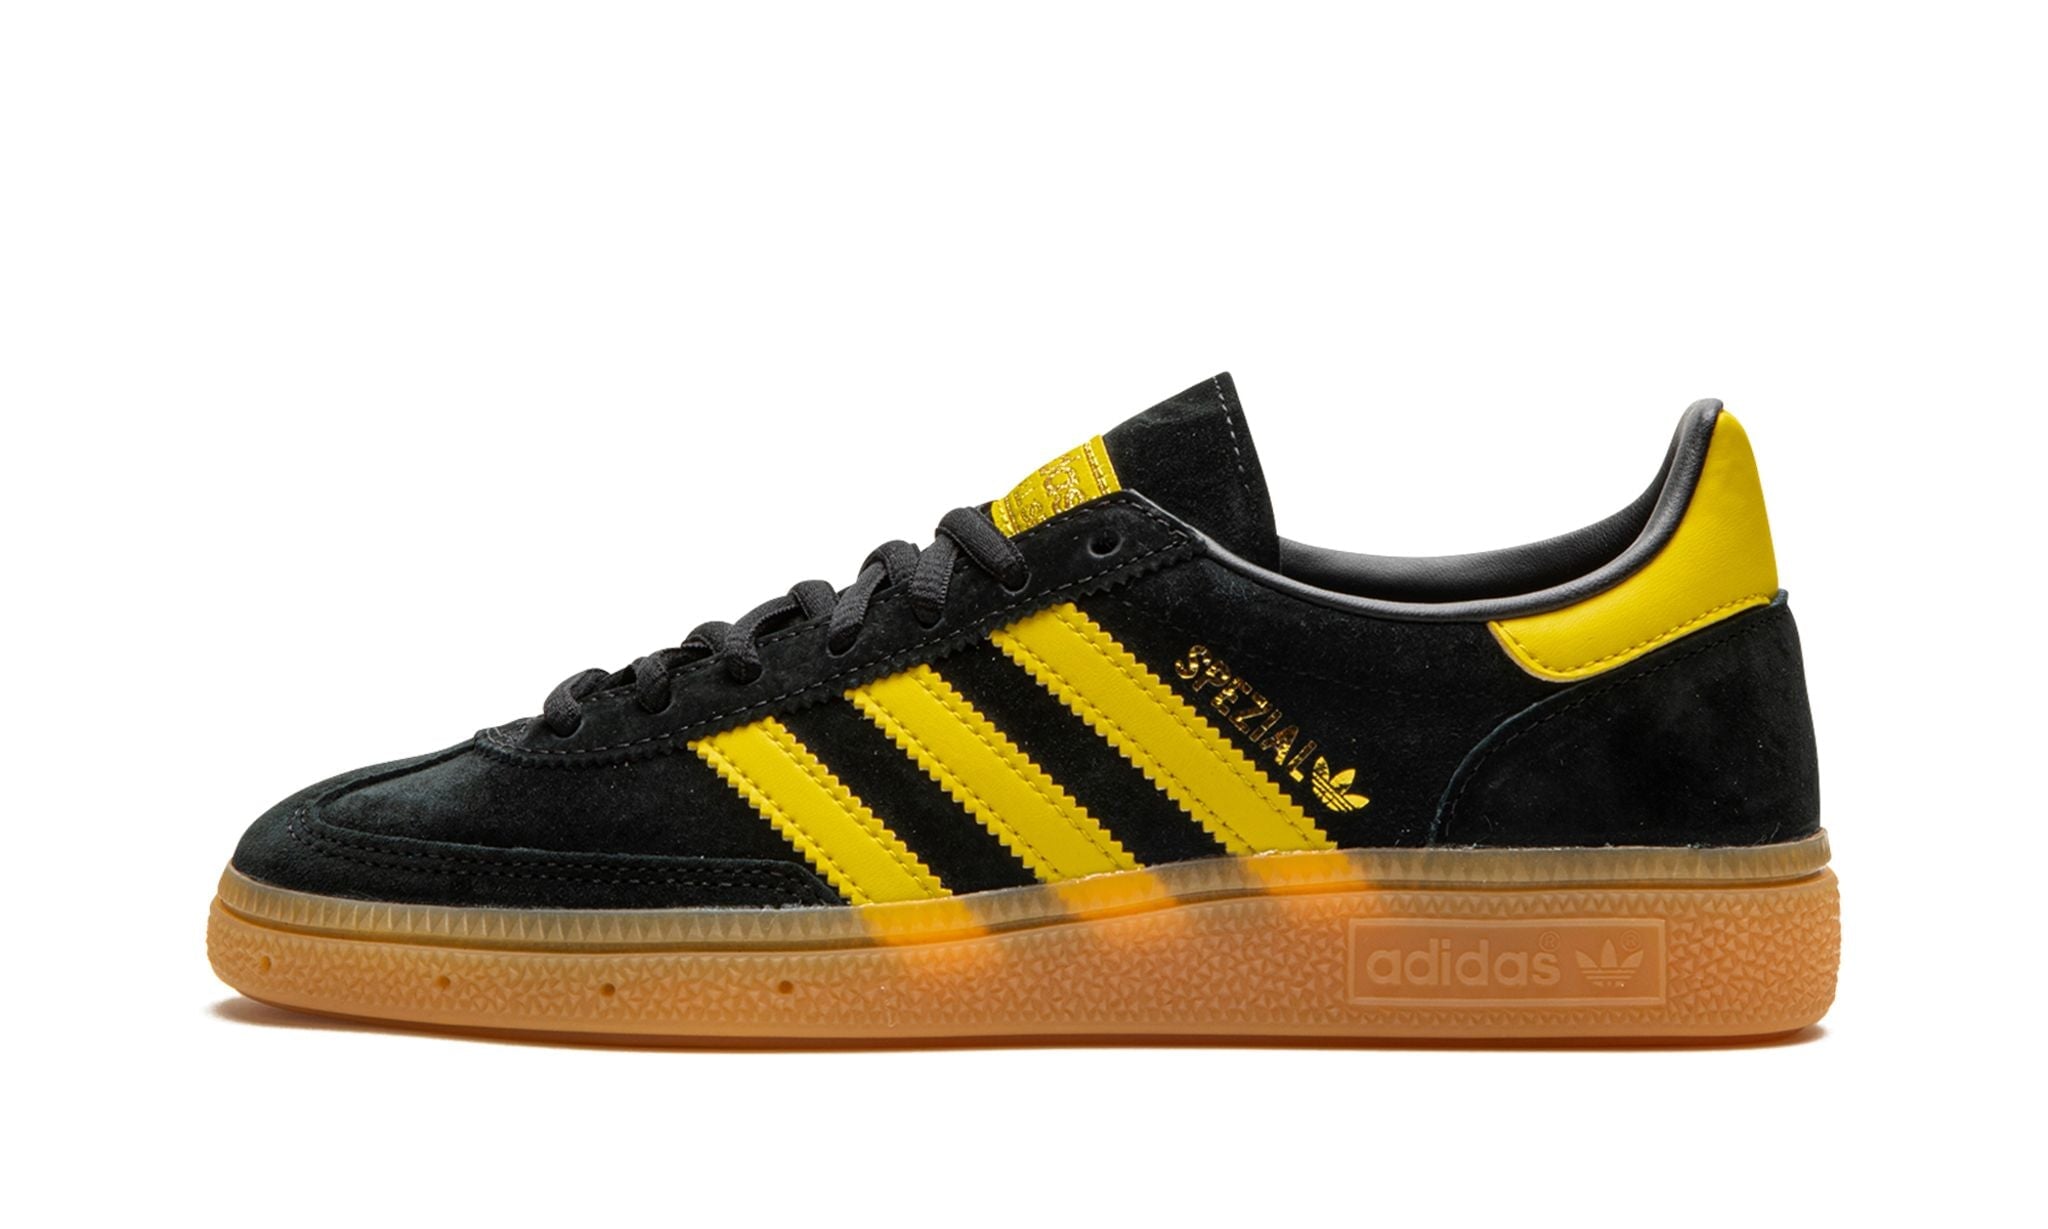 Adidas Handball Spezial Black Yellow - Addict Sneakers